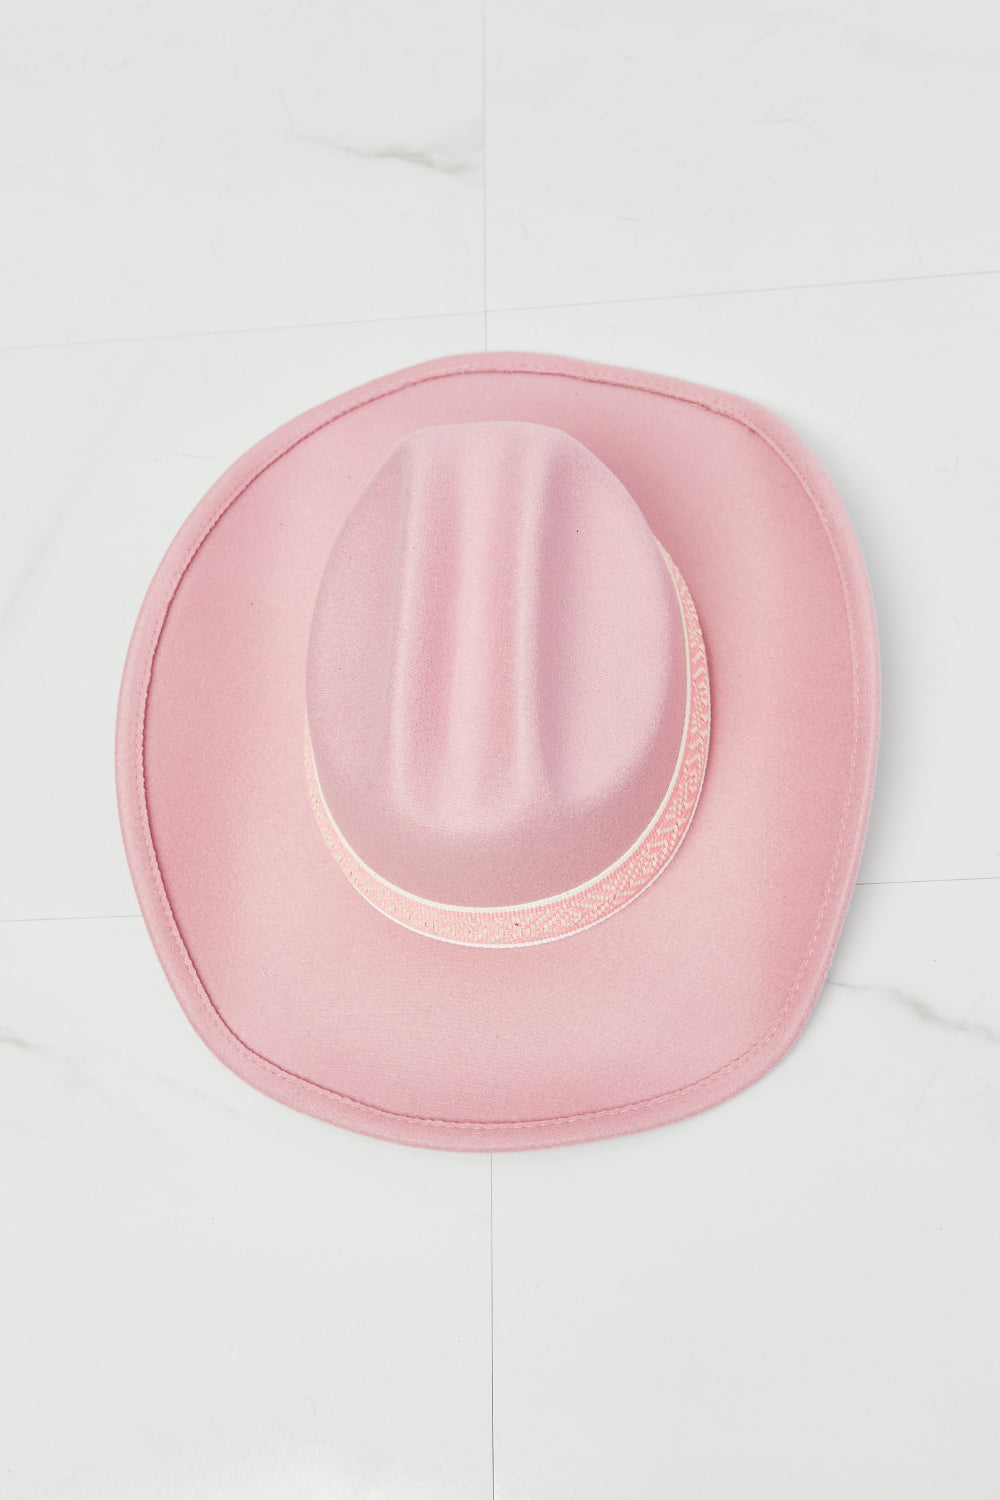 Fame Western Cutie Cowboy Hat in Pink - Online Only